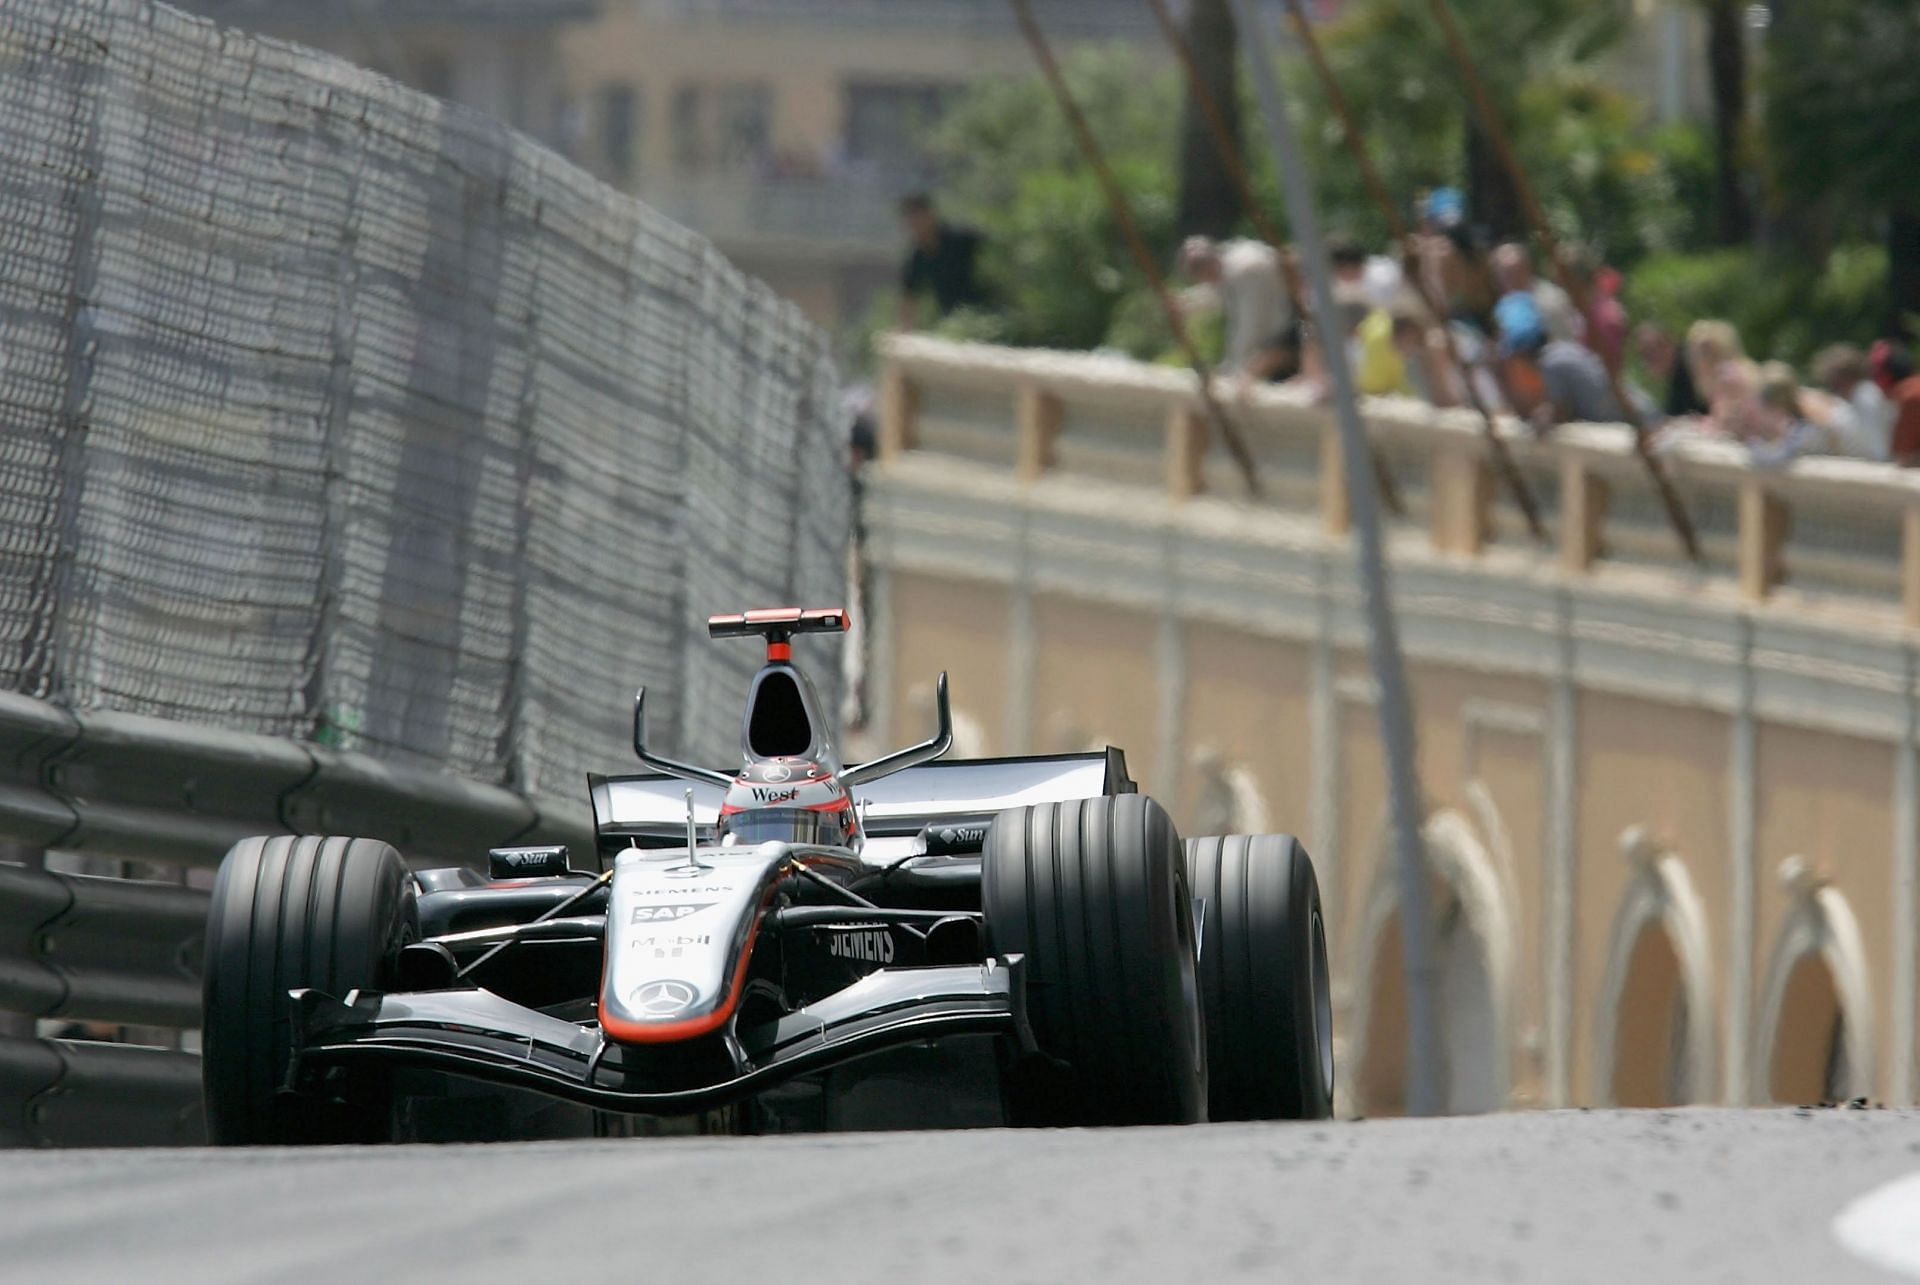 Kimi Raikkonen in the 2006 Monaco GP was magical!